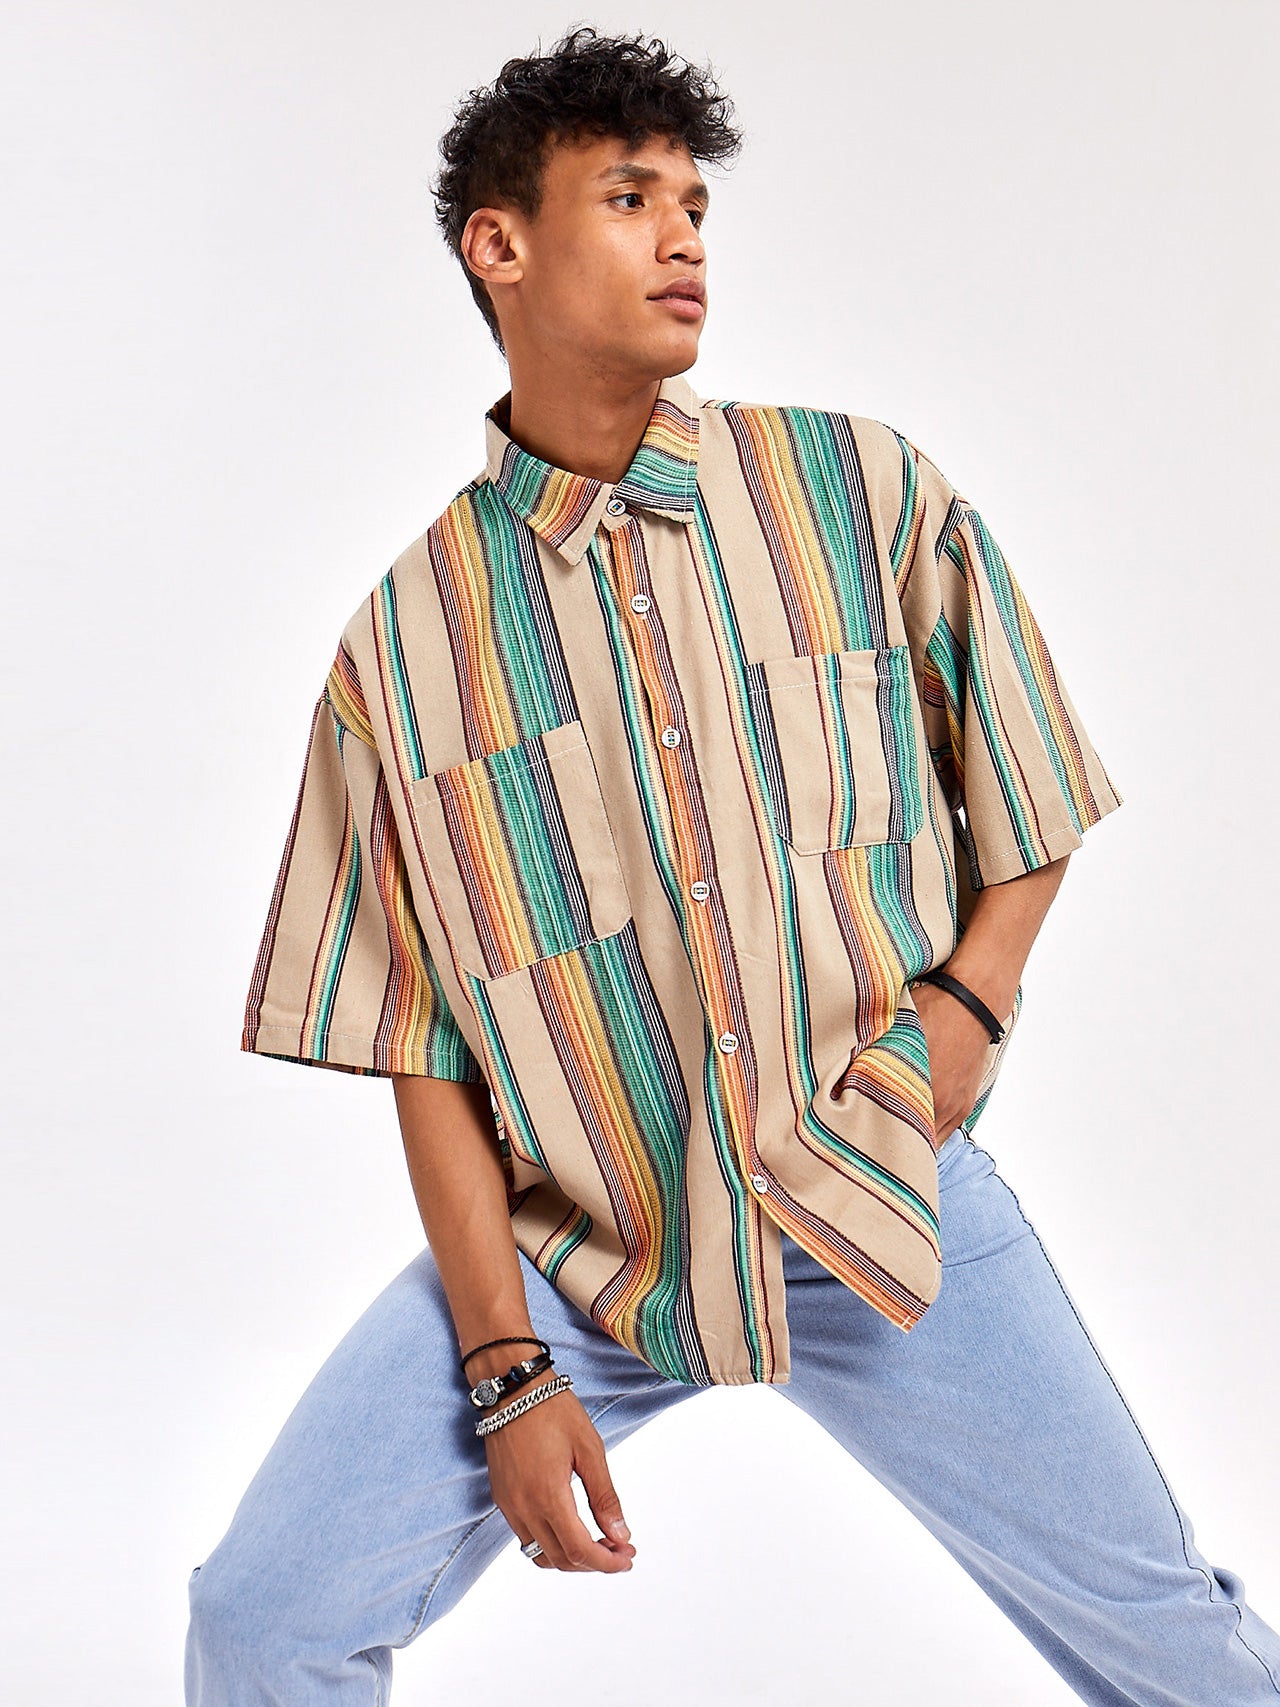 JUSTNOTAG Fashion Casual Striped Colorblock Cotton Turn-down Collar Shirts